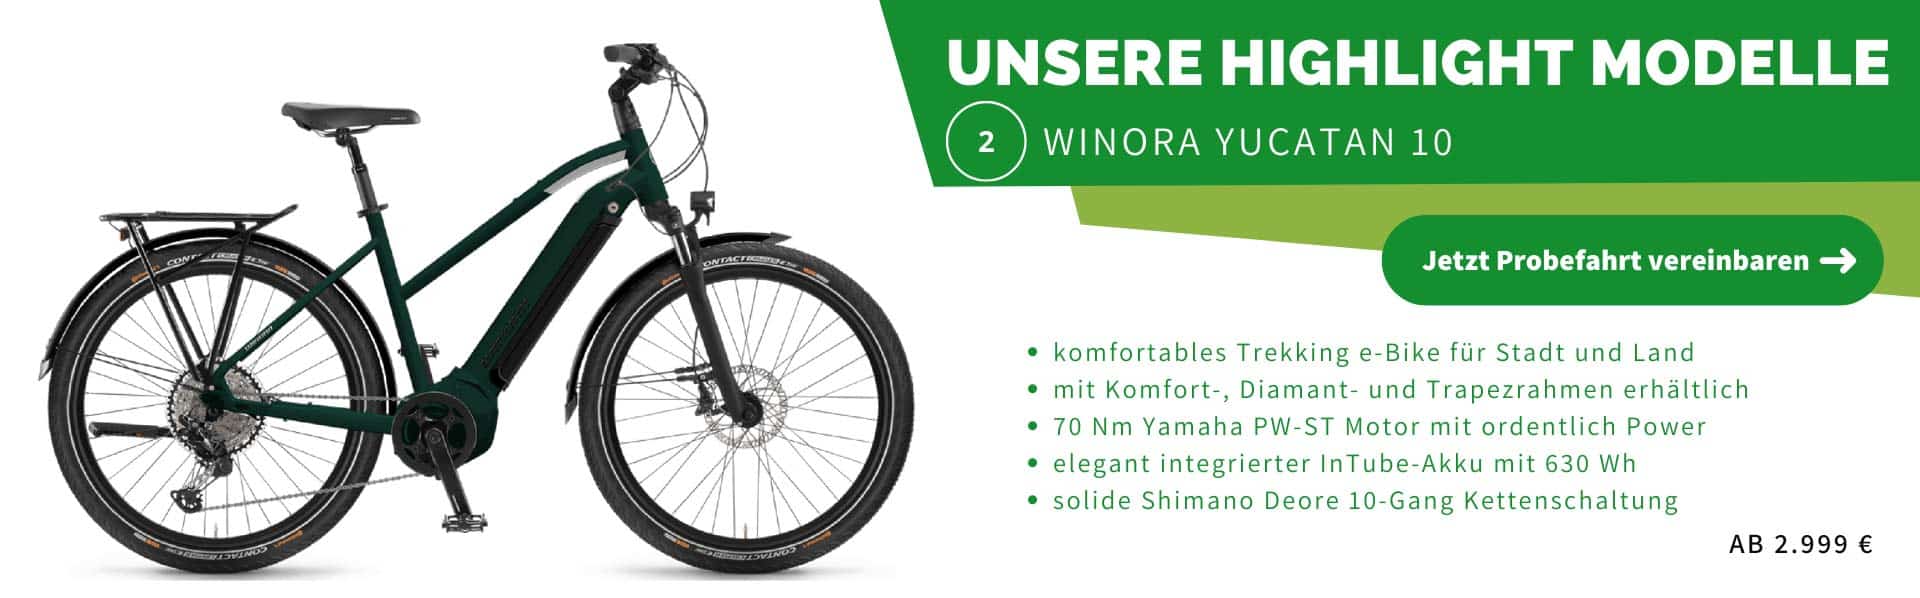 Highlight e-Bike Modell Winora Yucatan 10